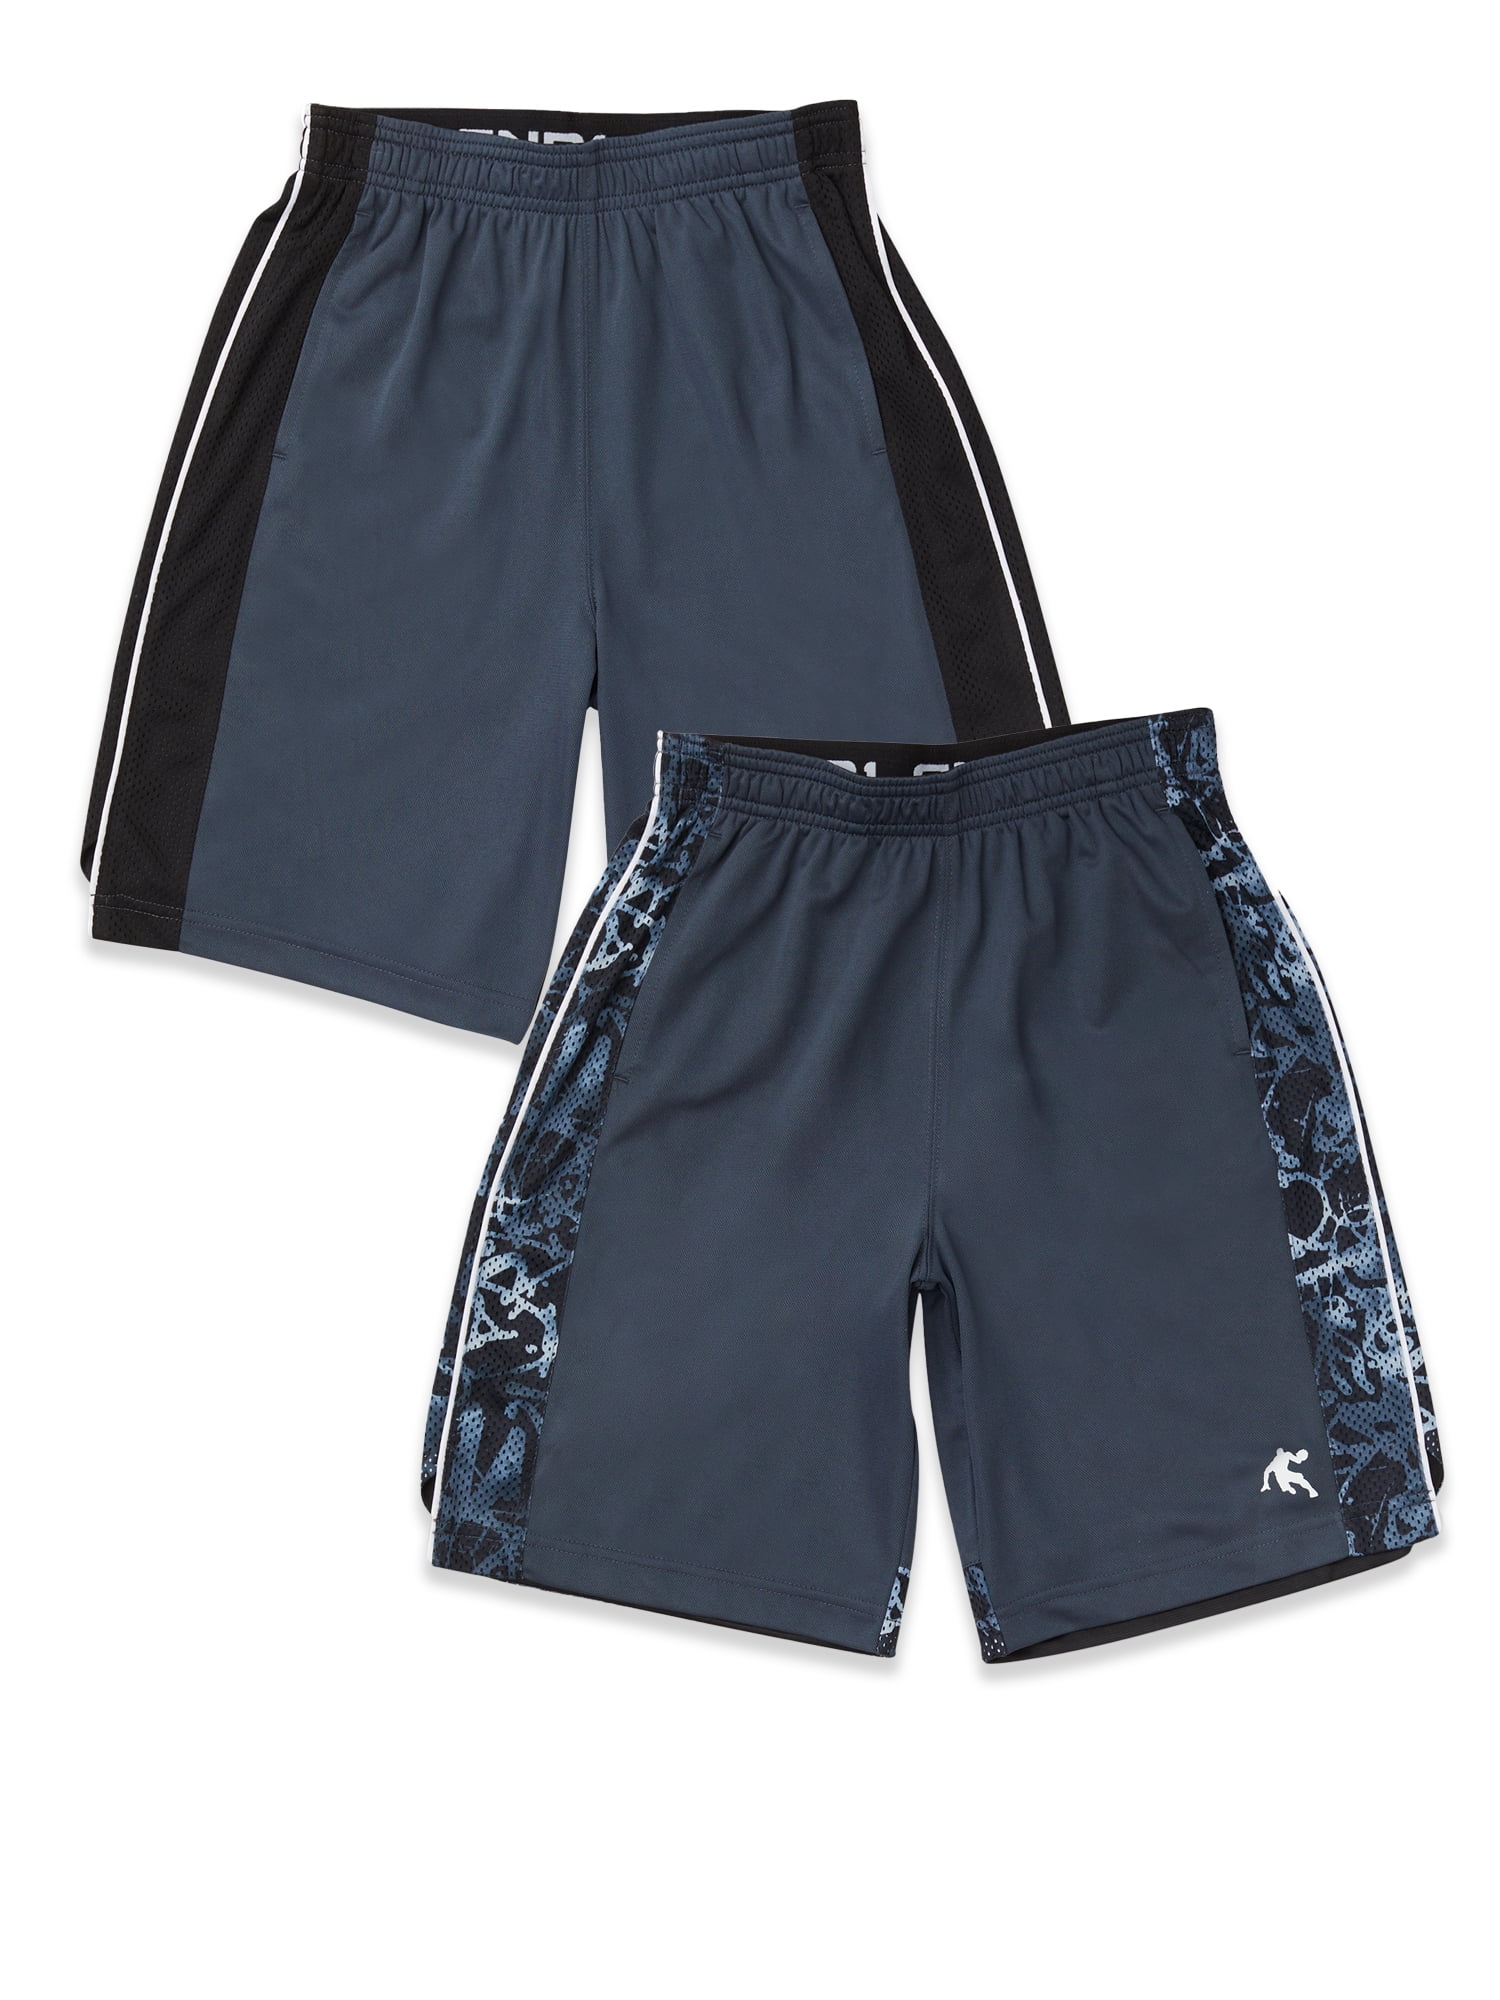 Black/Blue RBX Boys? Active Shorts ? Athletic Performance Basketball Shorts 2 Pack Size 4 